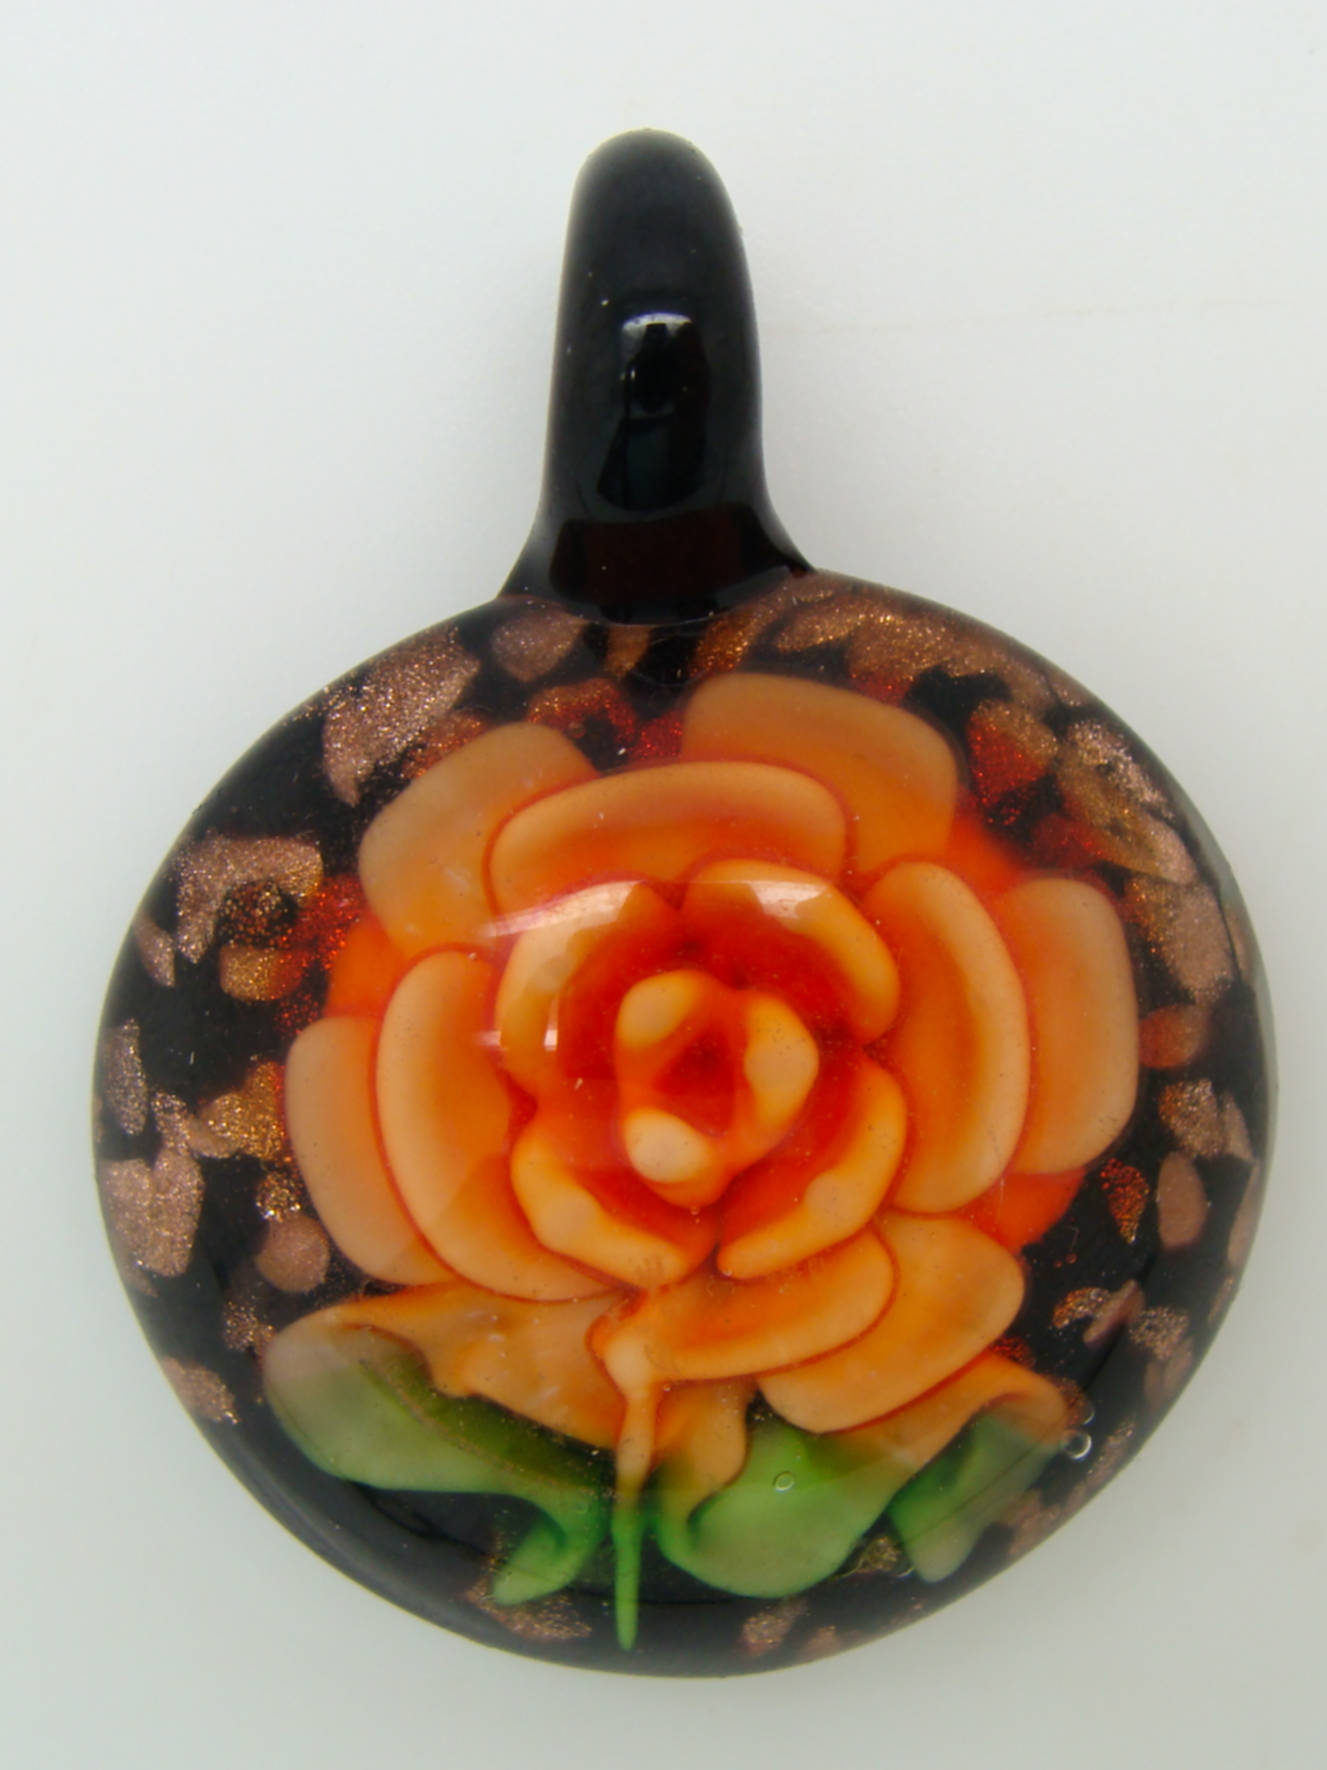 Pend-272-4 pendentif fleur rose orange lampwork